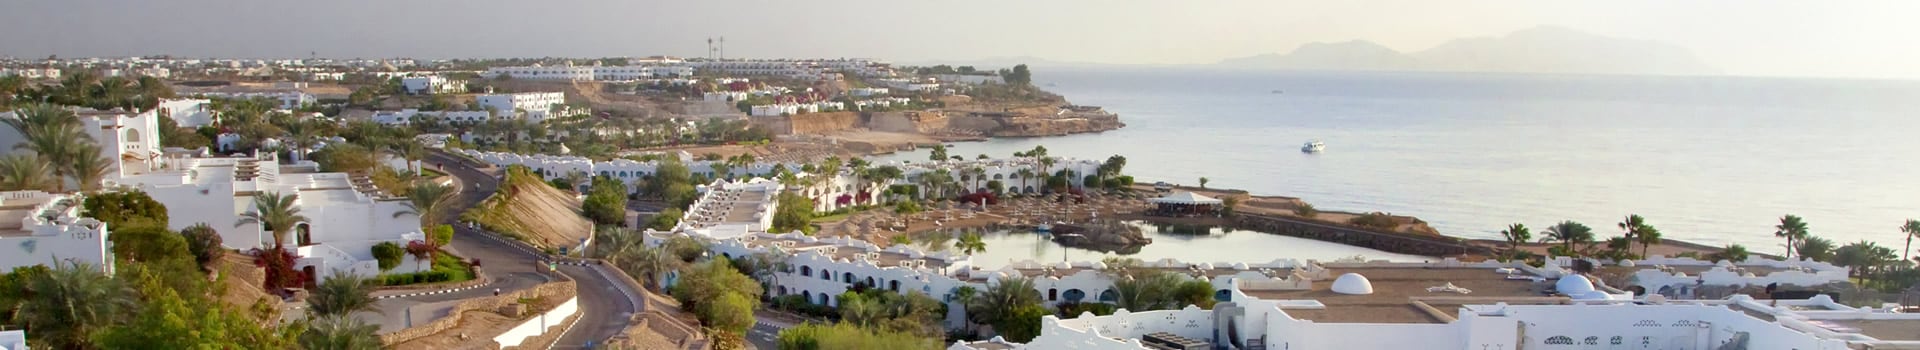 Tunis - Sharm el sheikh - ophira